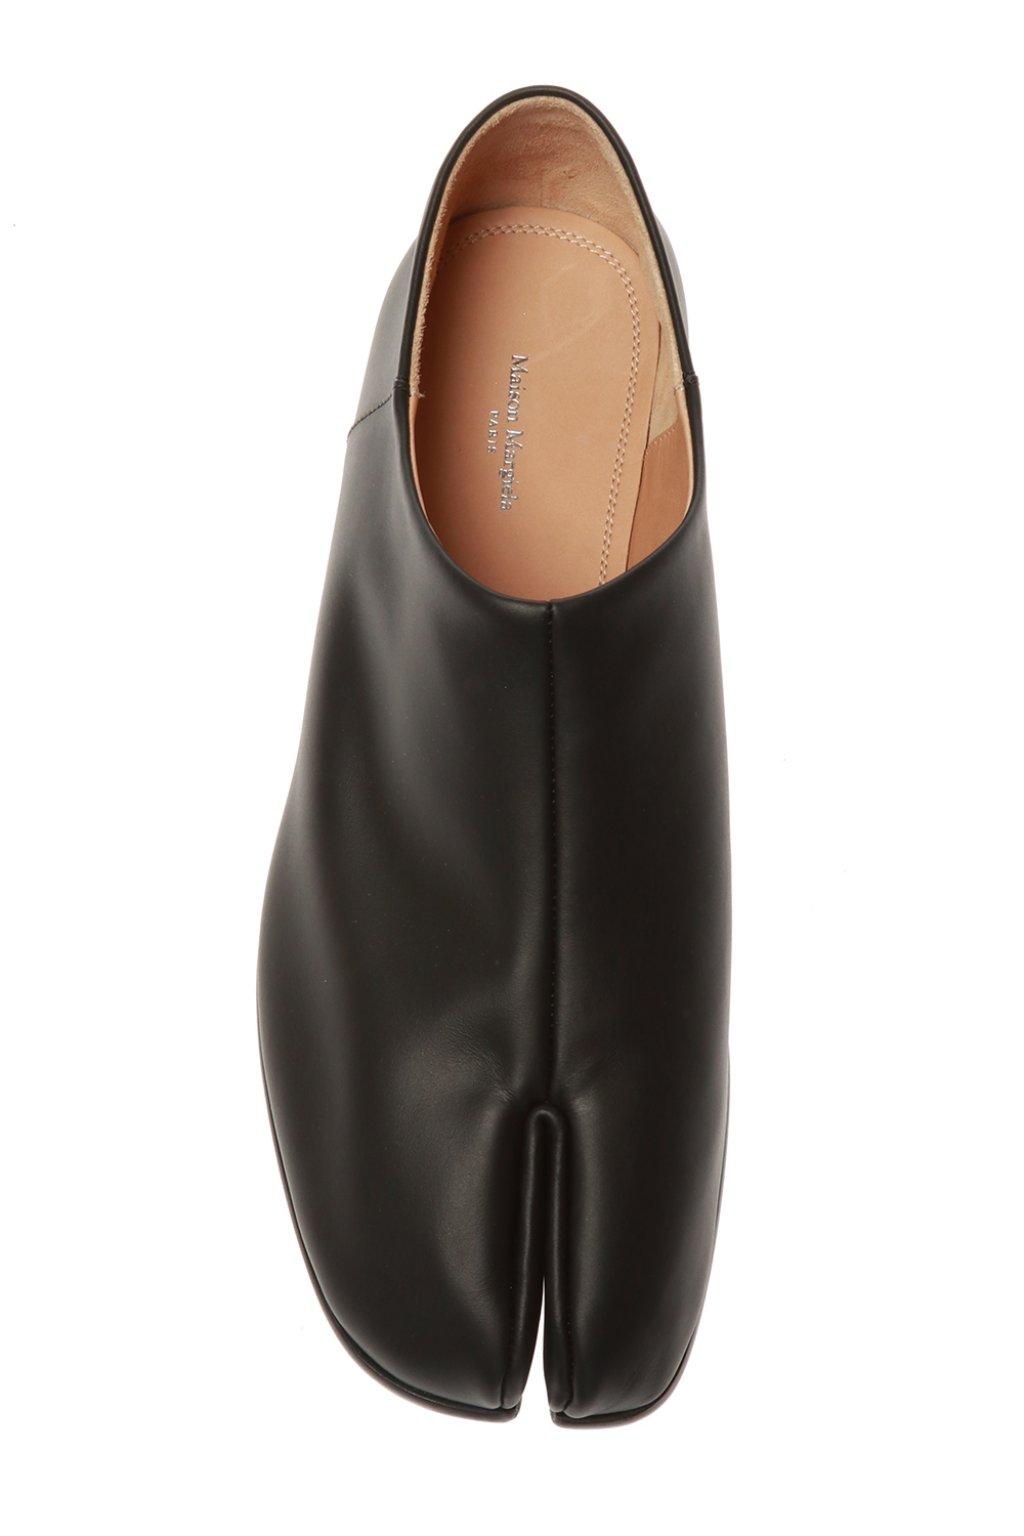 Maison Margiela Leather 'tabi' Split Toe Shoes Black for Men - Lyst